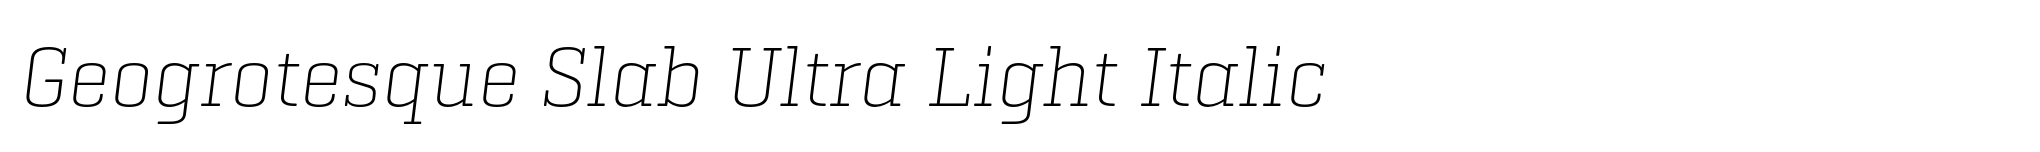 Geogrotesque Slab Ultra Light Italic image